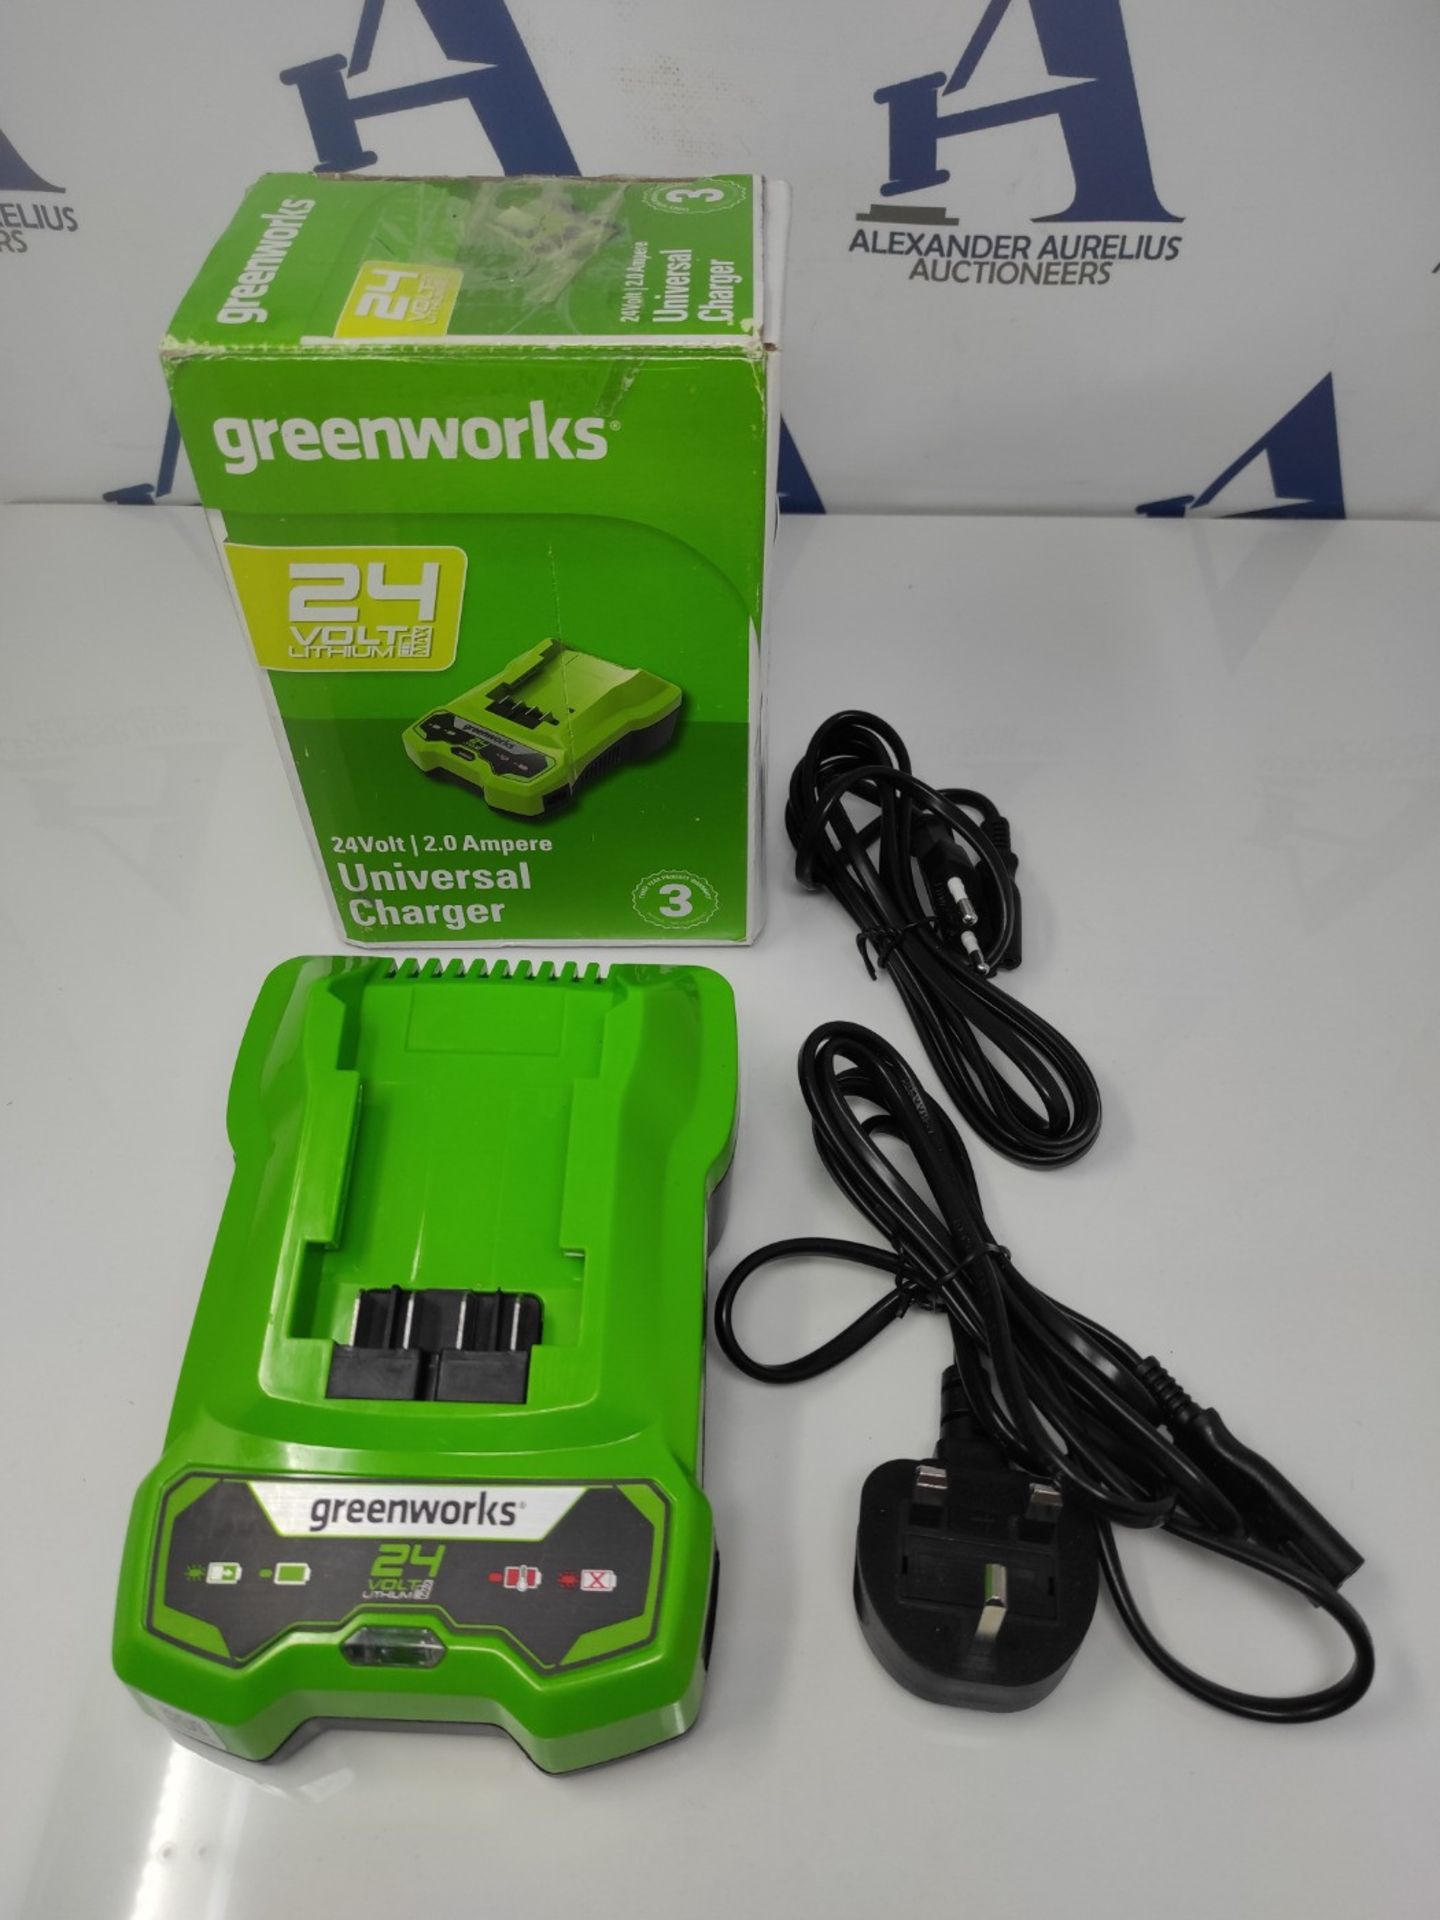 Greenworks 24V Battery Charger. Suitable for all Batteries of the 24V Greenworks Serie - Image 2 of 2